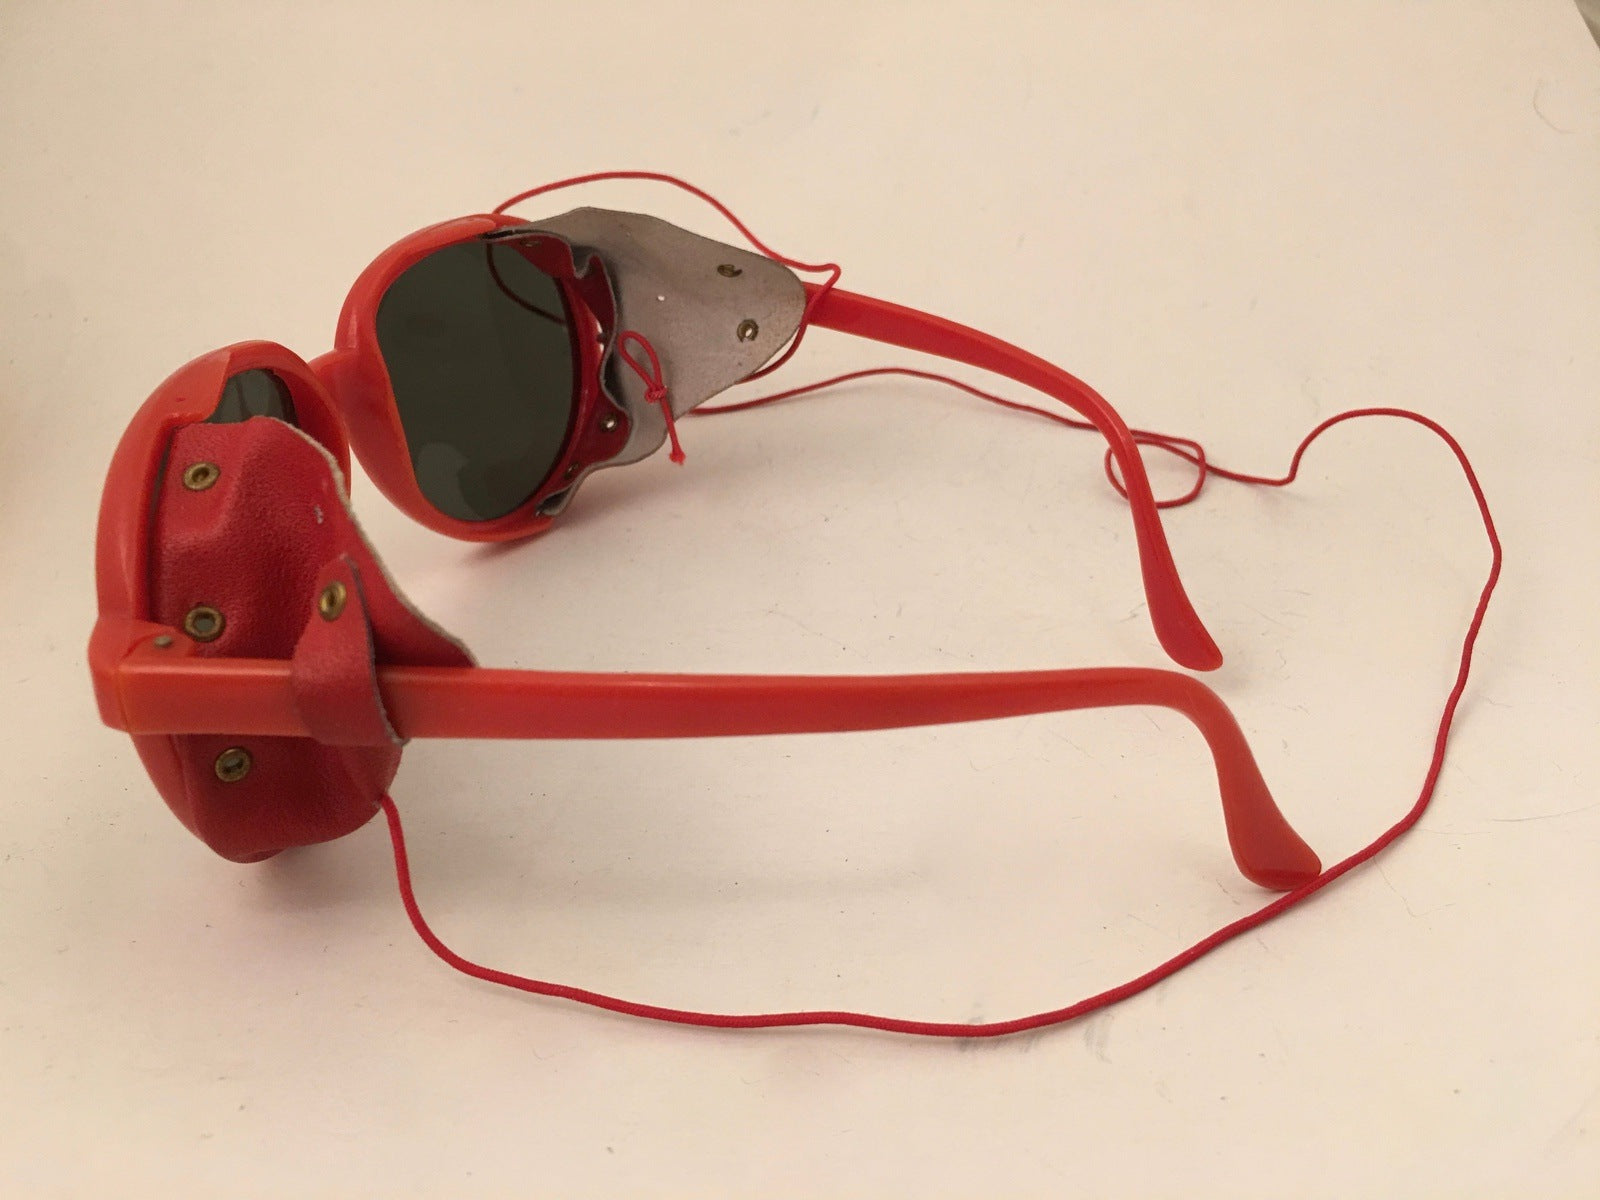 Red Aviator Sunglasses Vintage Eyewear Leather sides Mirrored Lenses